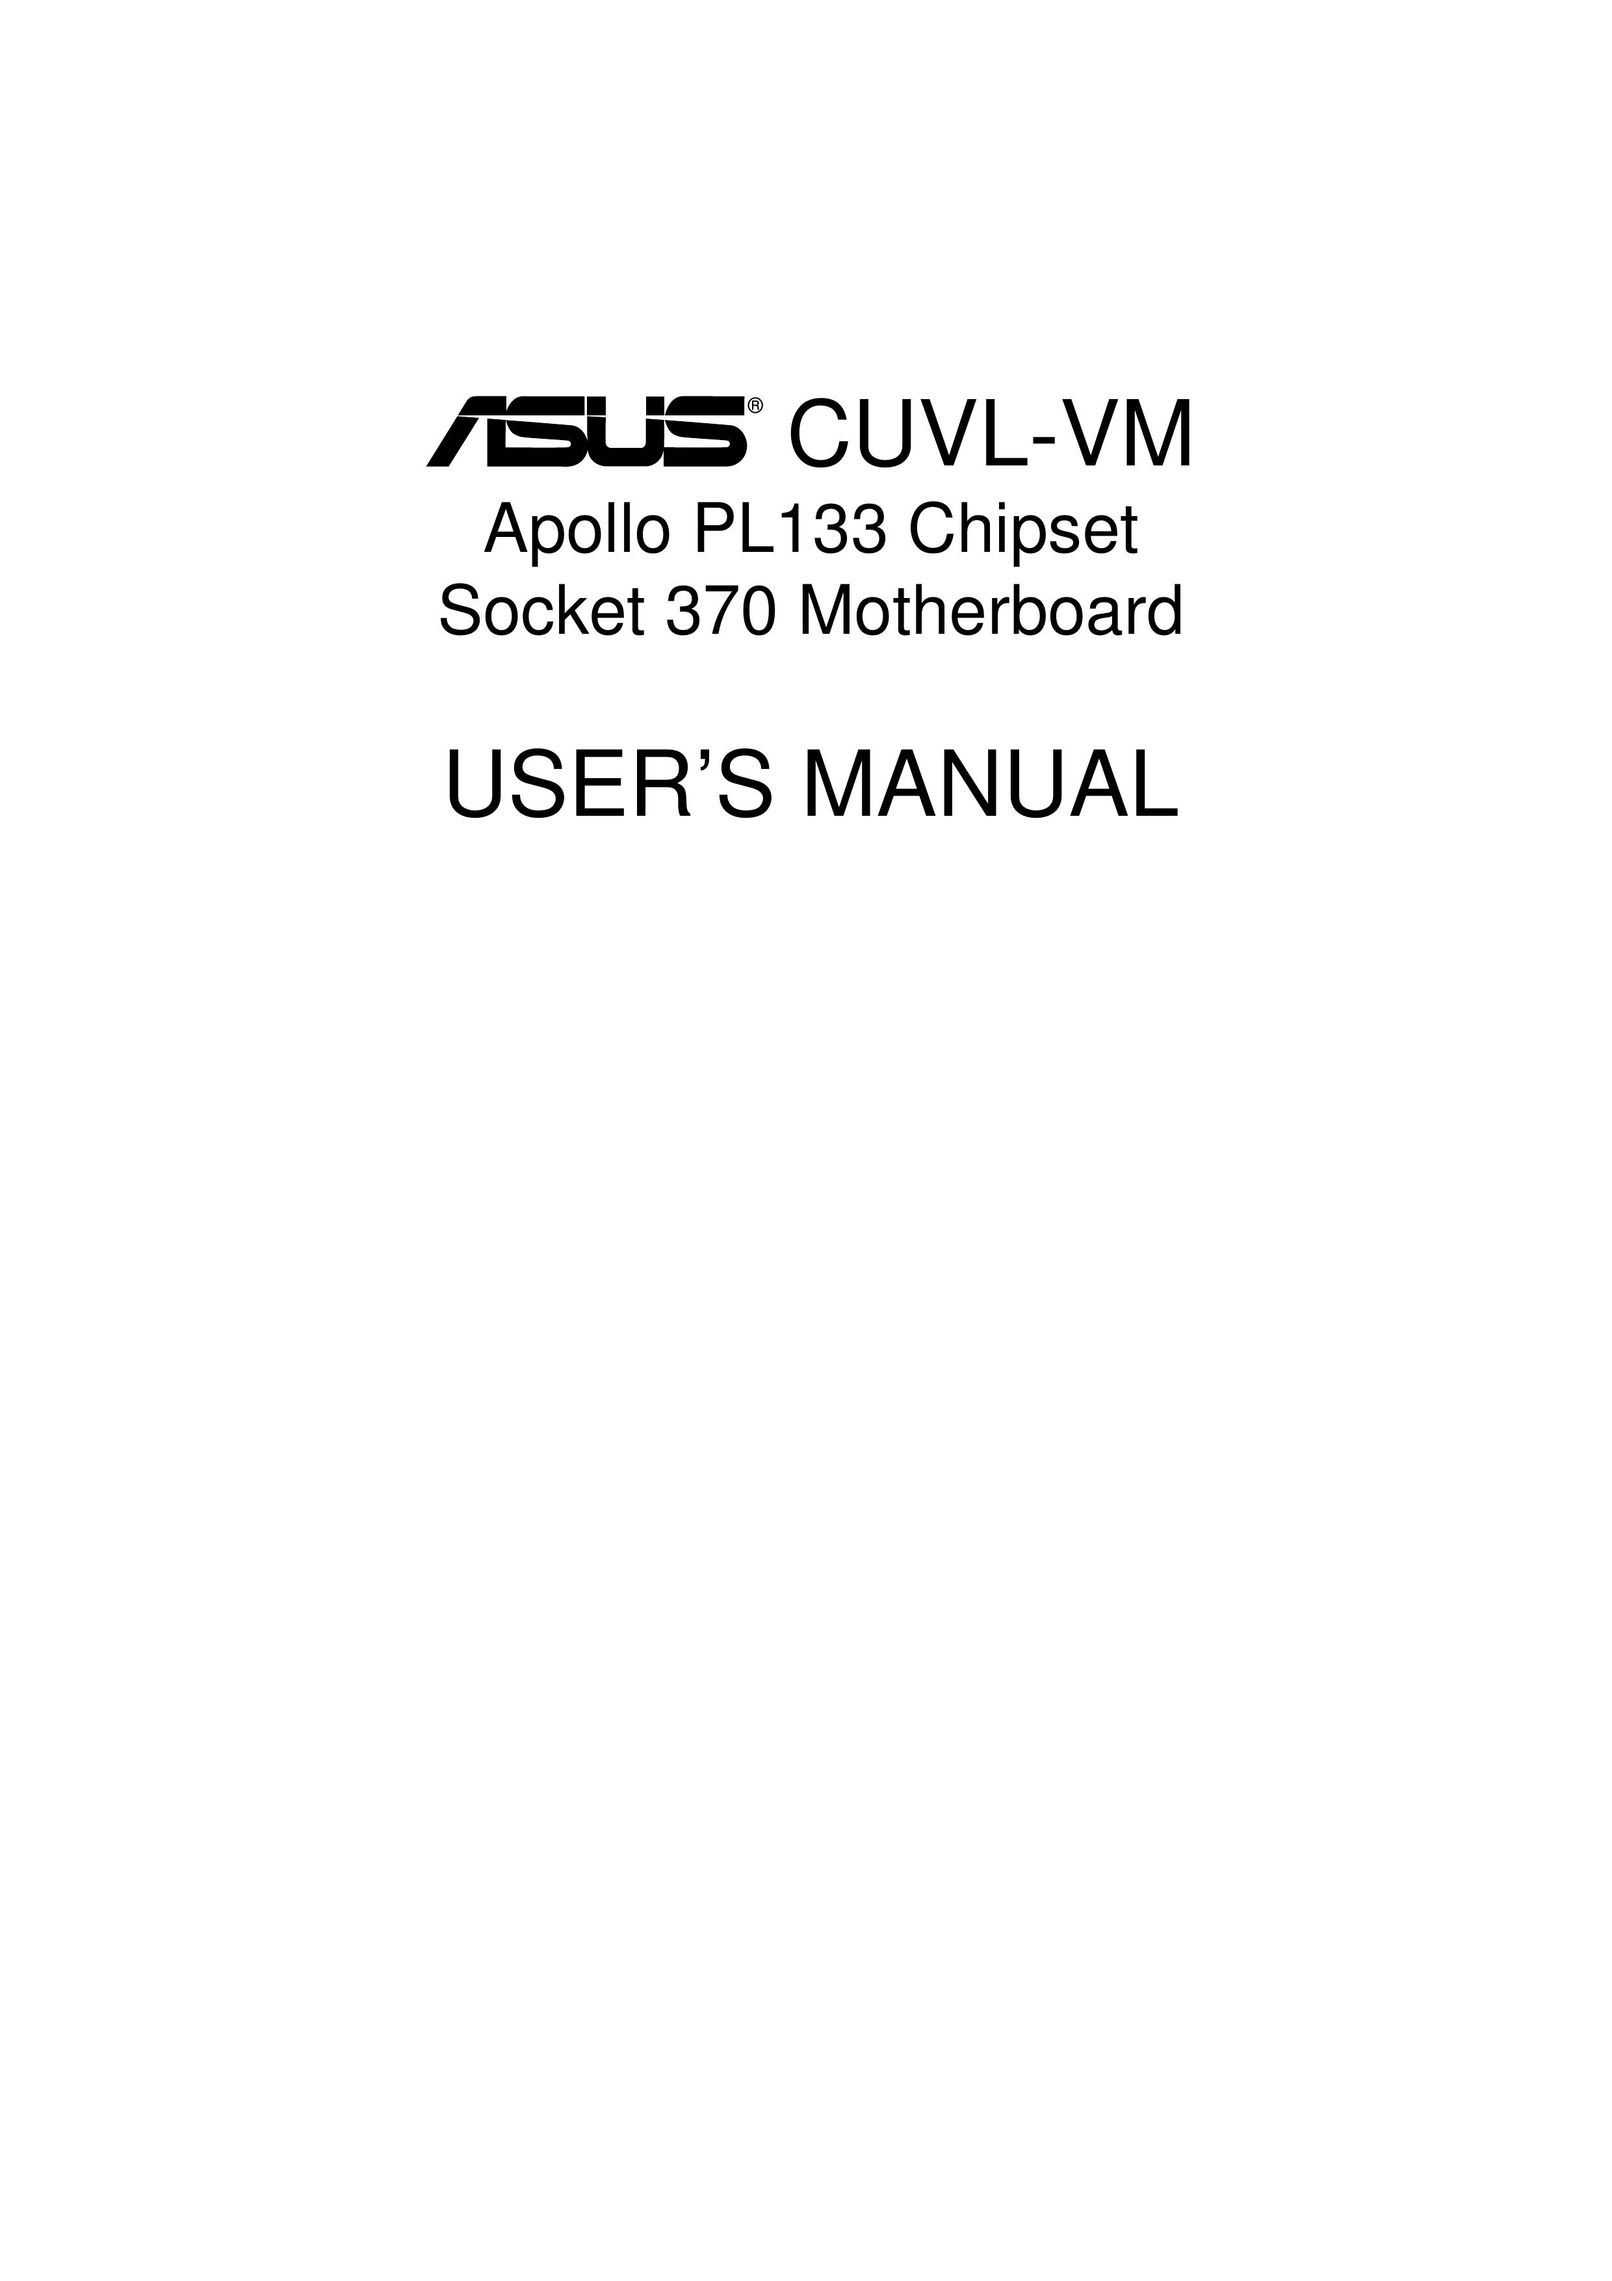 Asus CUVL-VM Network Card User Manual